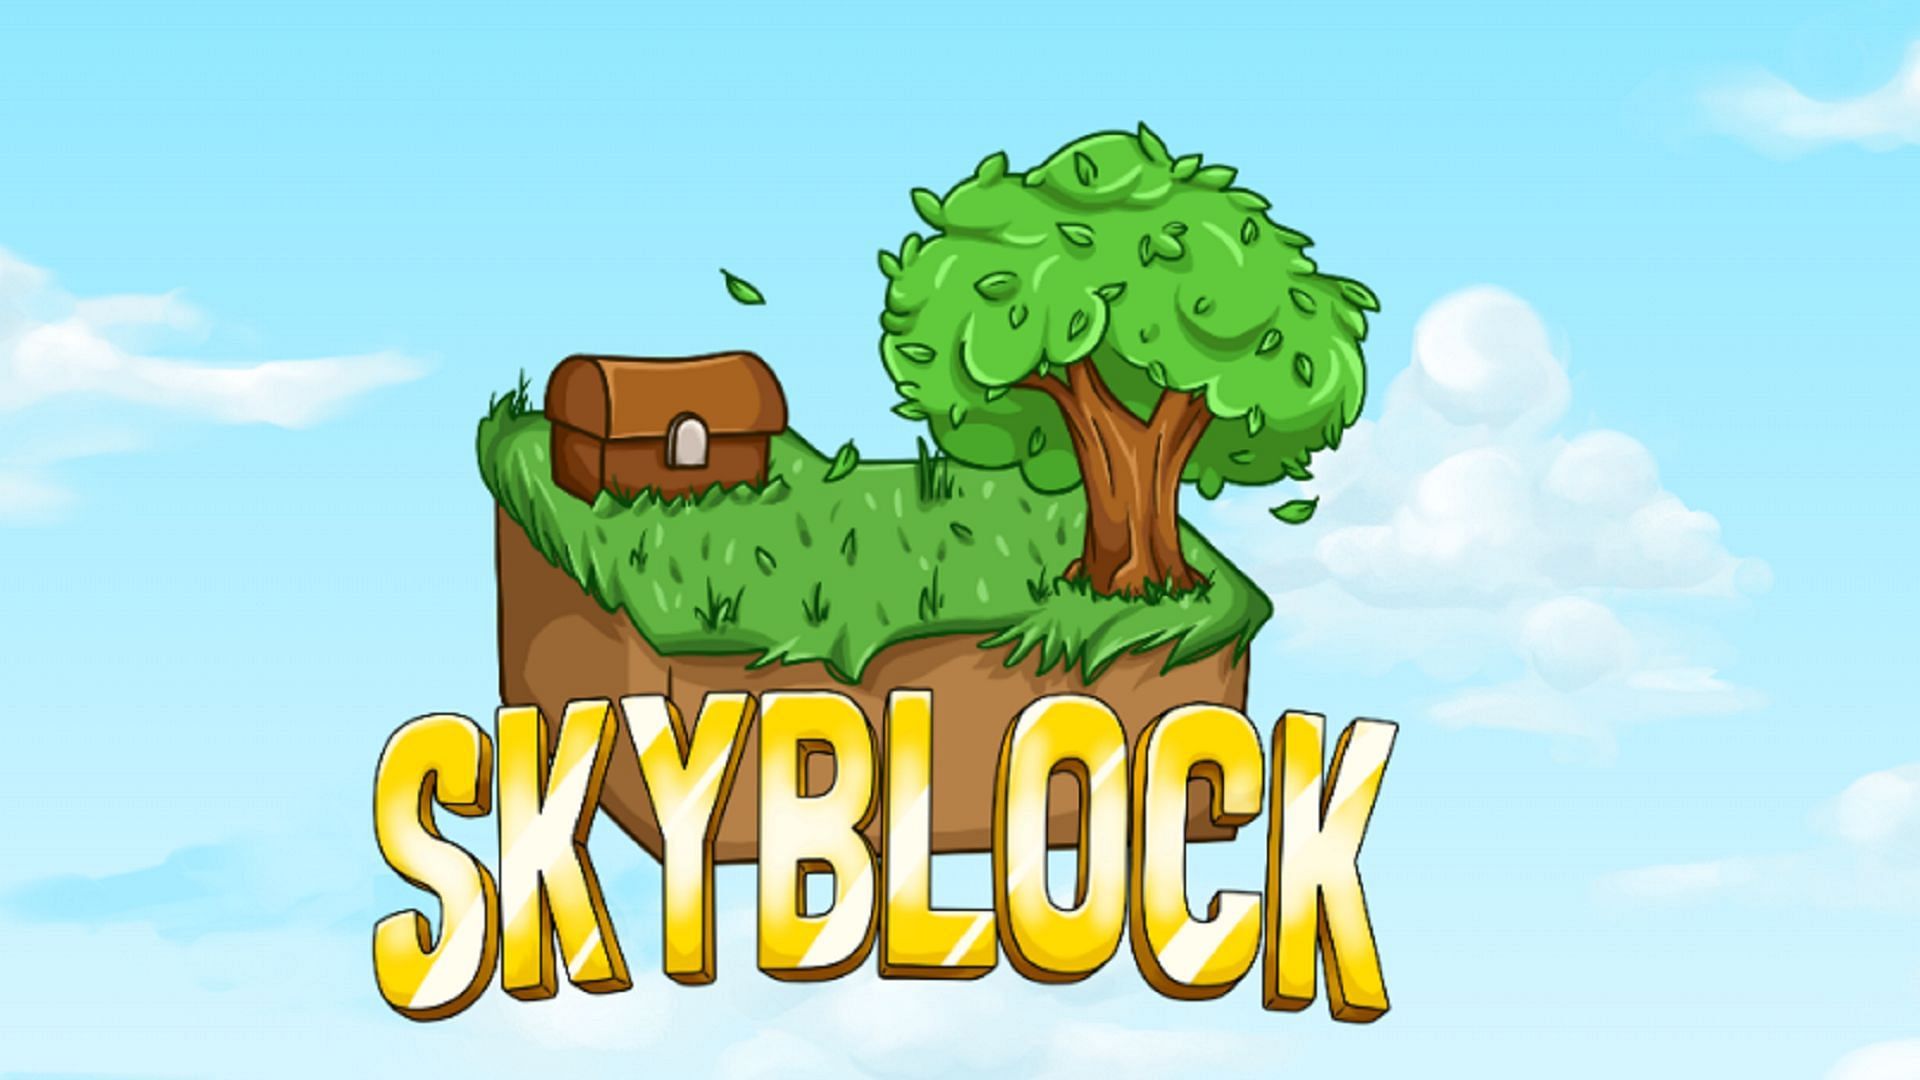 Skyblock gameplay is still very popular among Minecraft players (Image via Skyblock.net)